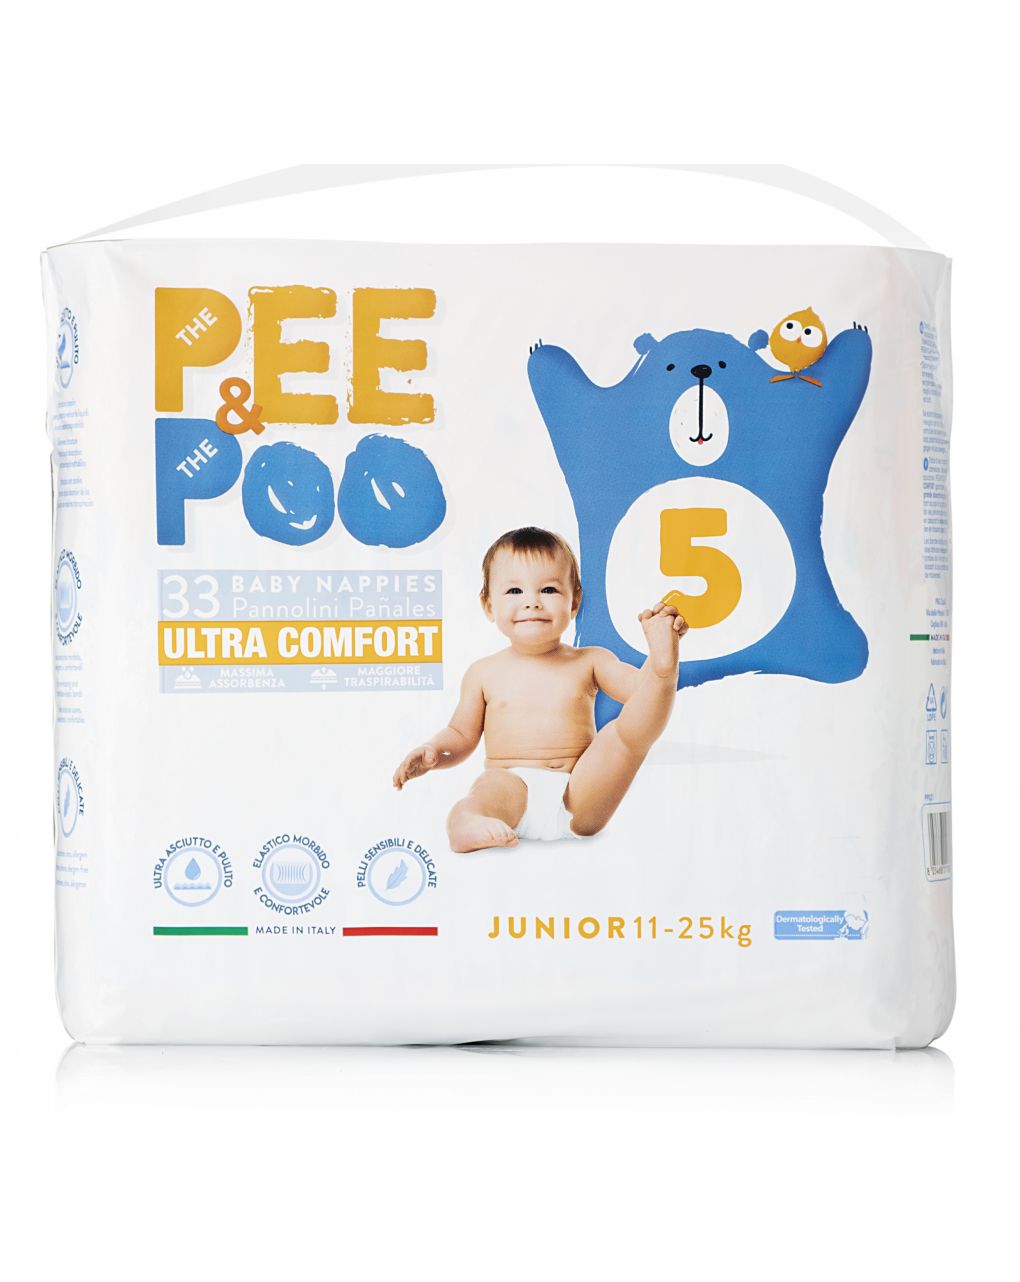 Pee&poo - junior tg5 33 pz